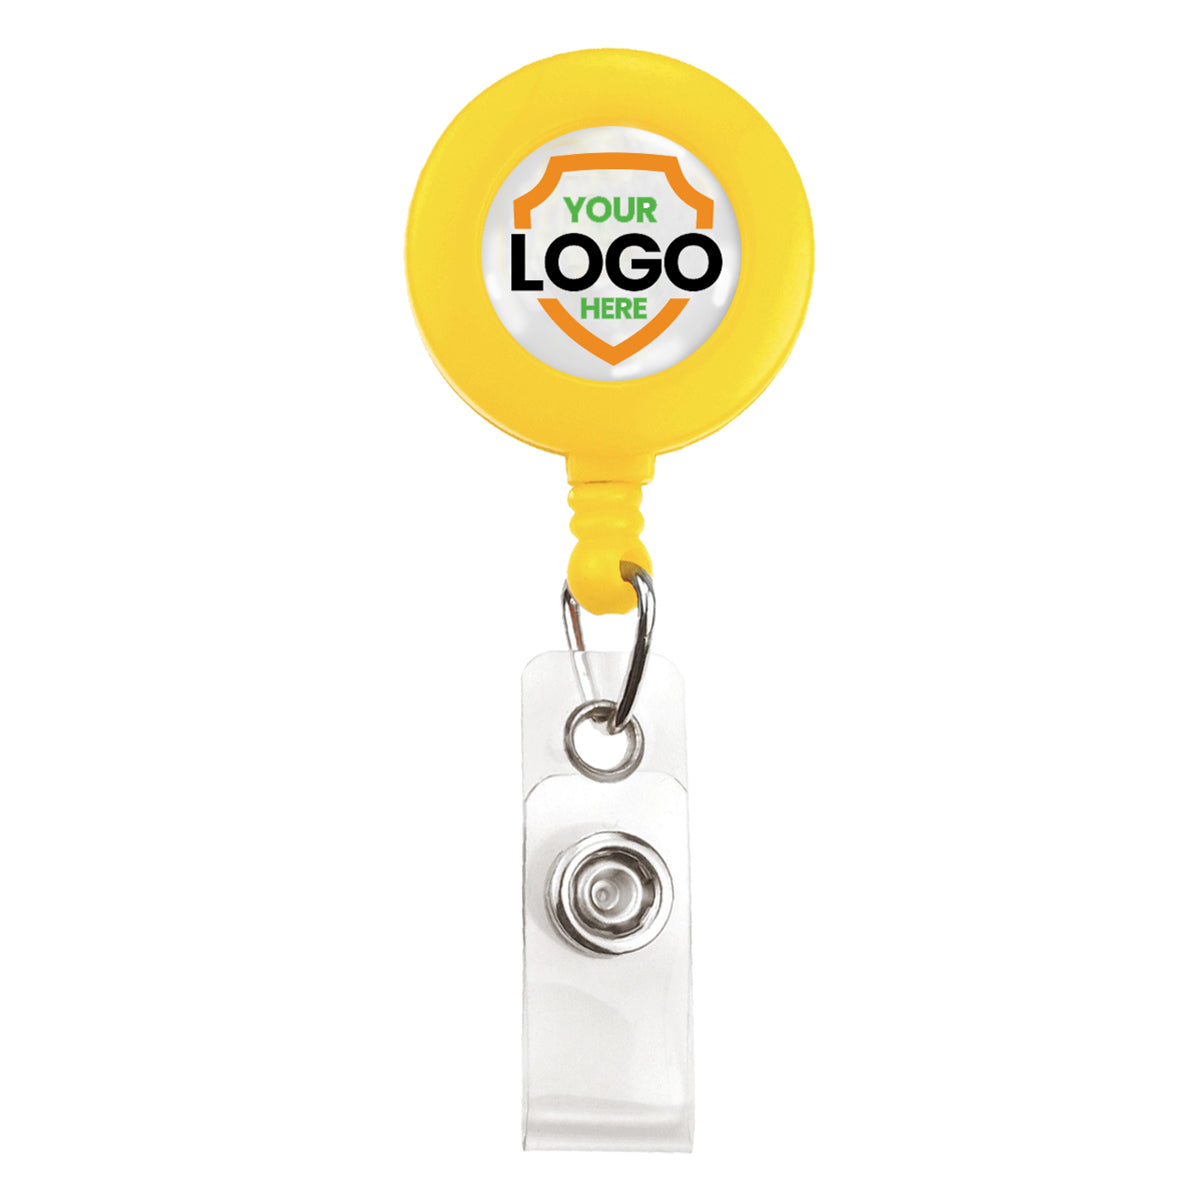 customizable badge reels - standard retractable custom badge reels for business branding 2120-3039 yellow